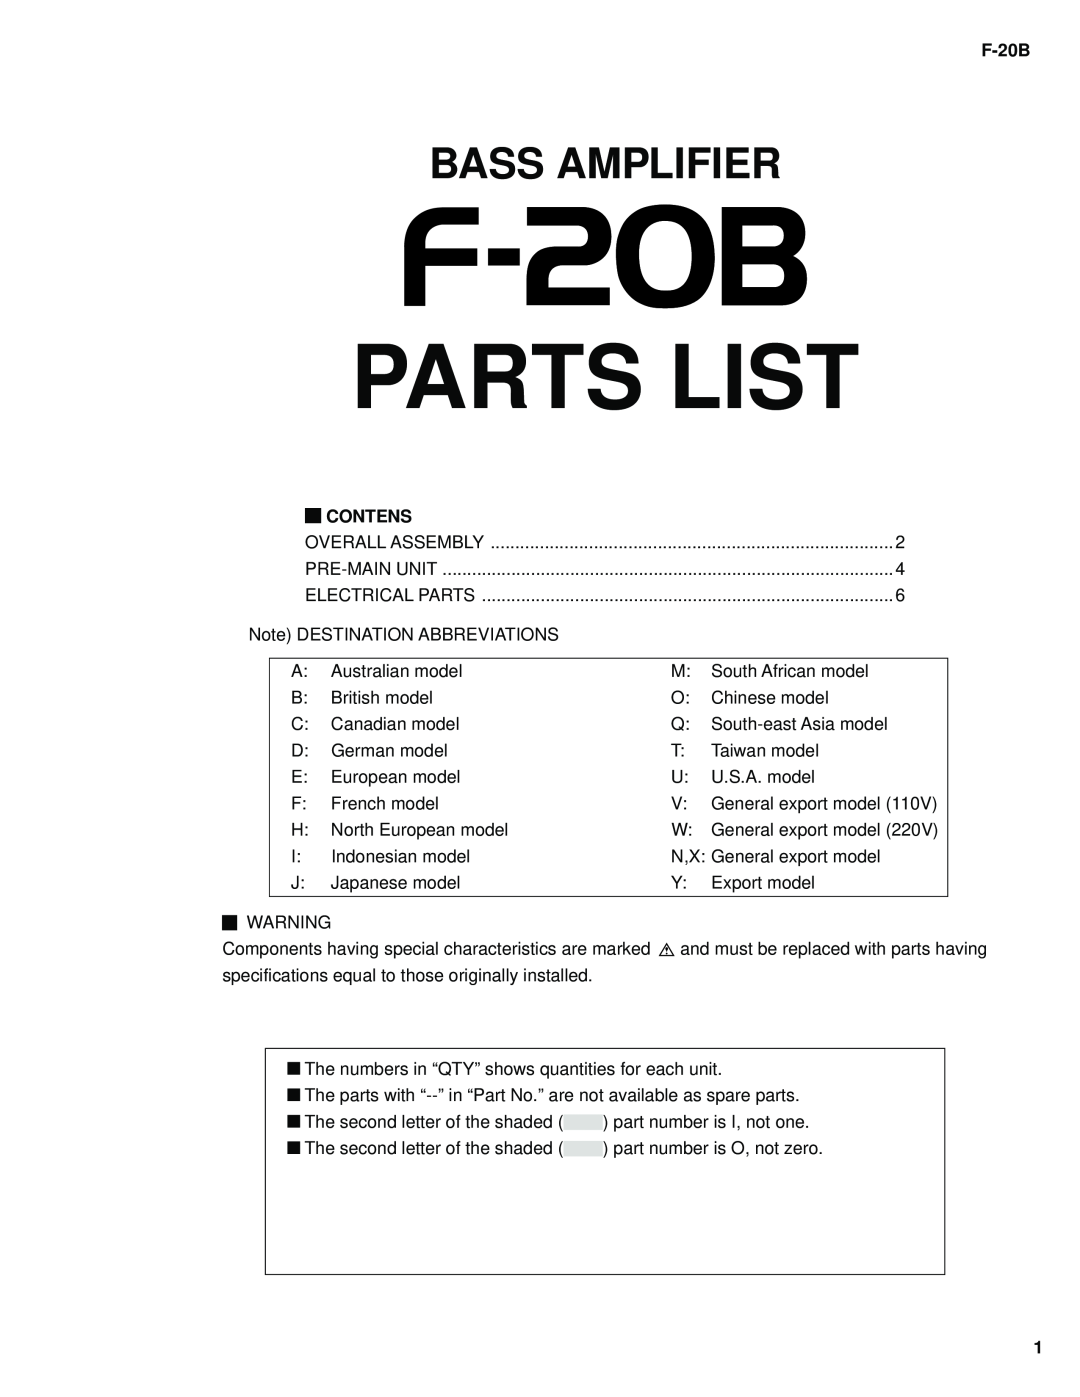 Yamaha Bass Amplifier service manual Contens, Parts List, F-20B 